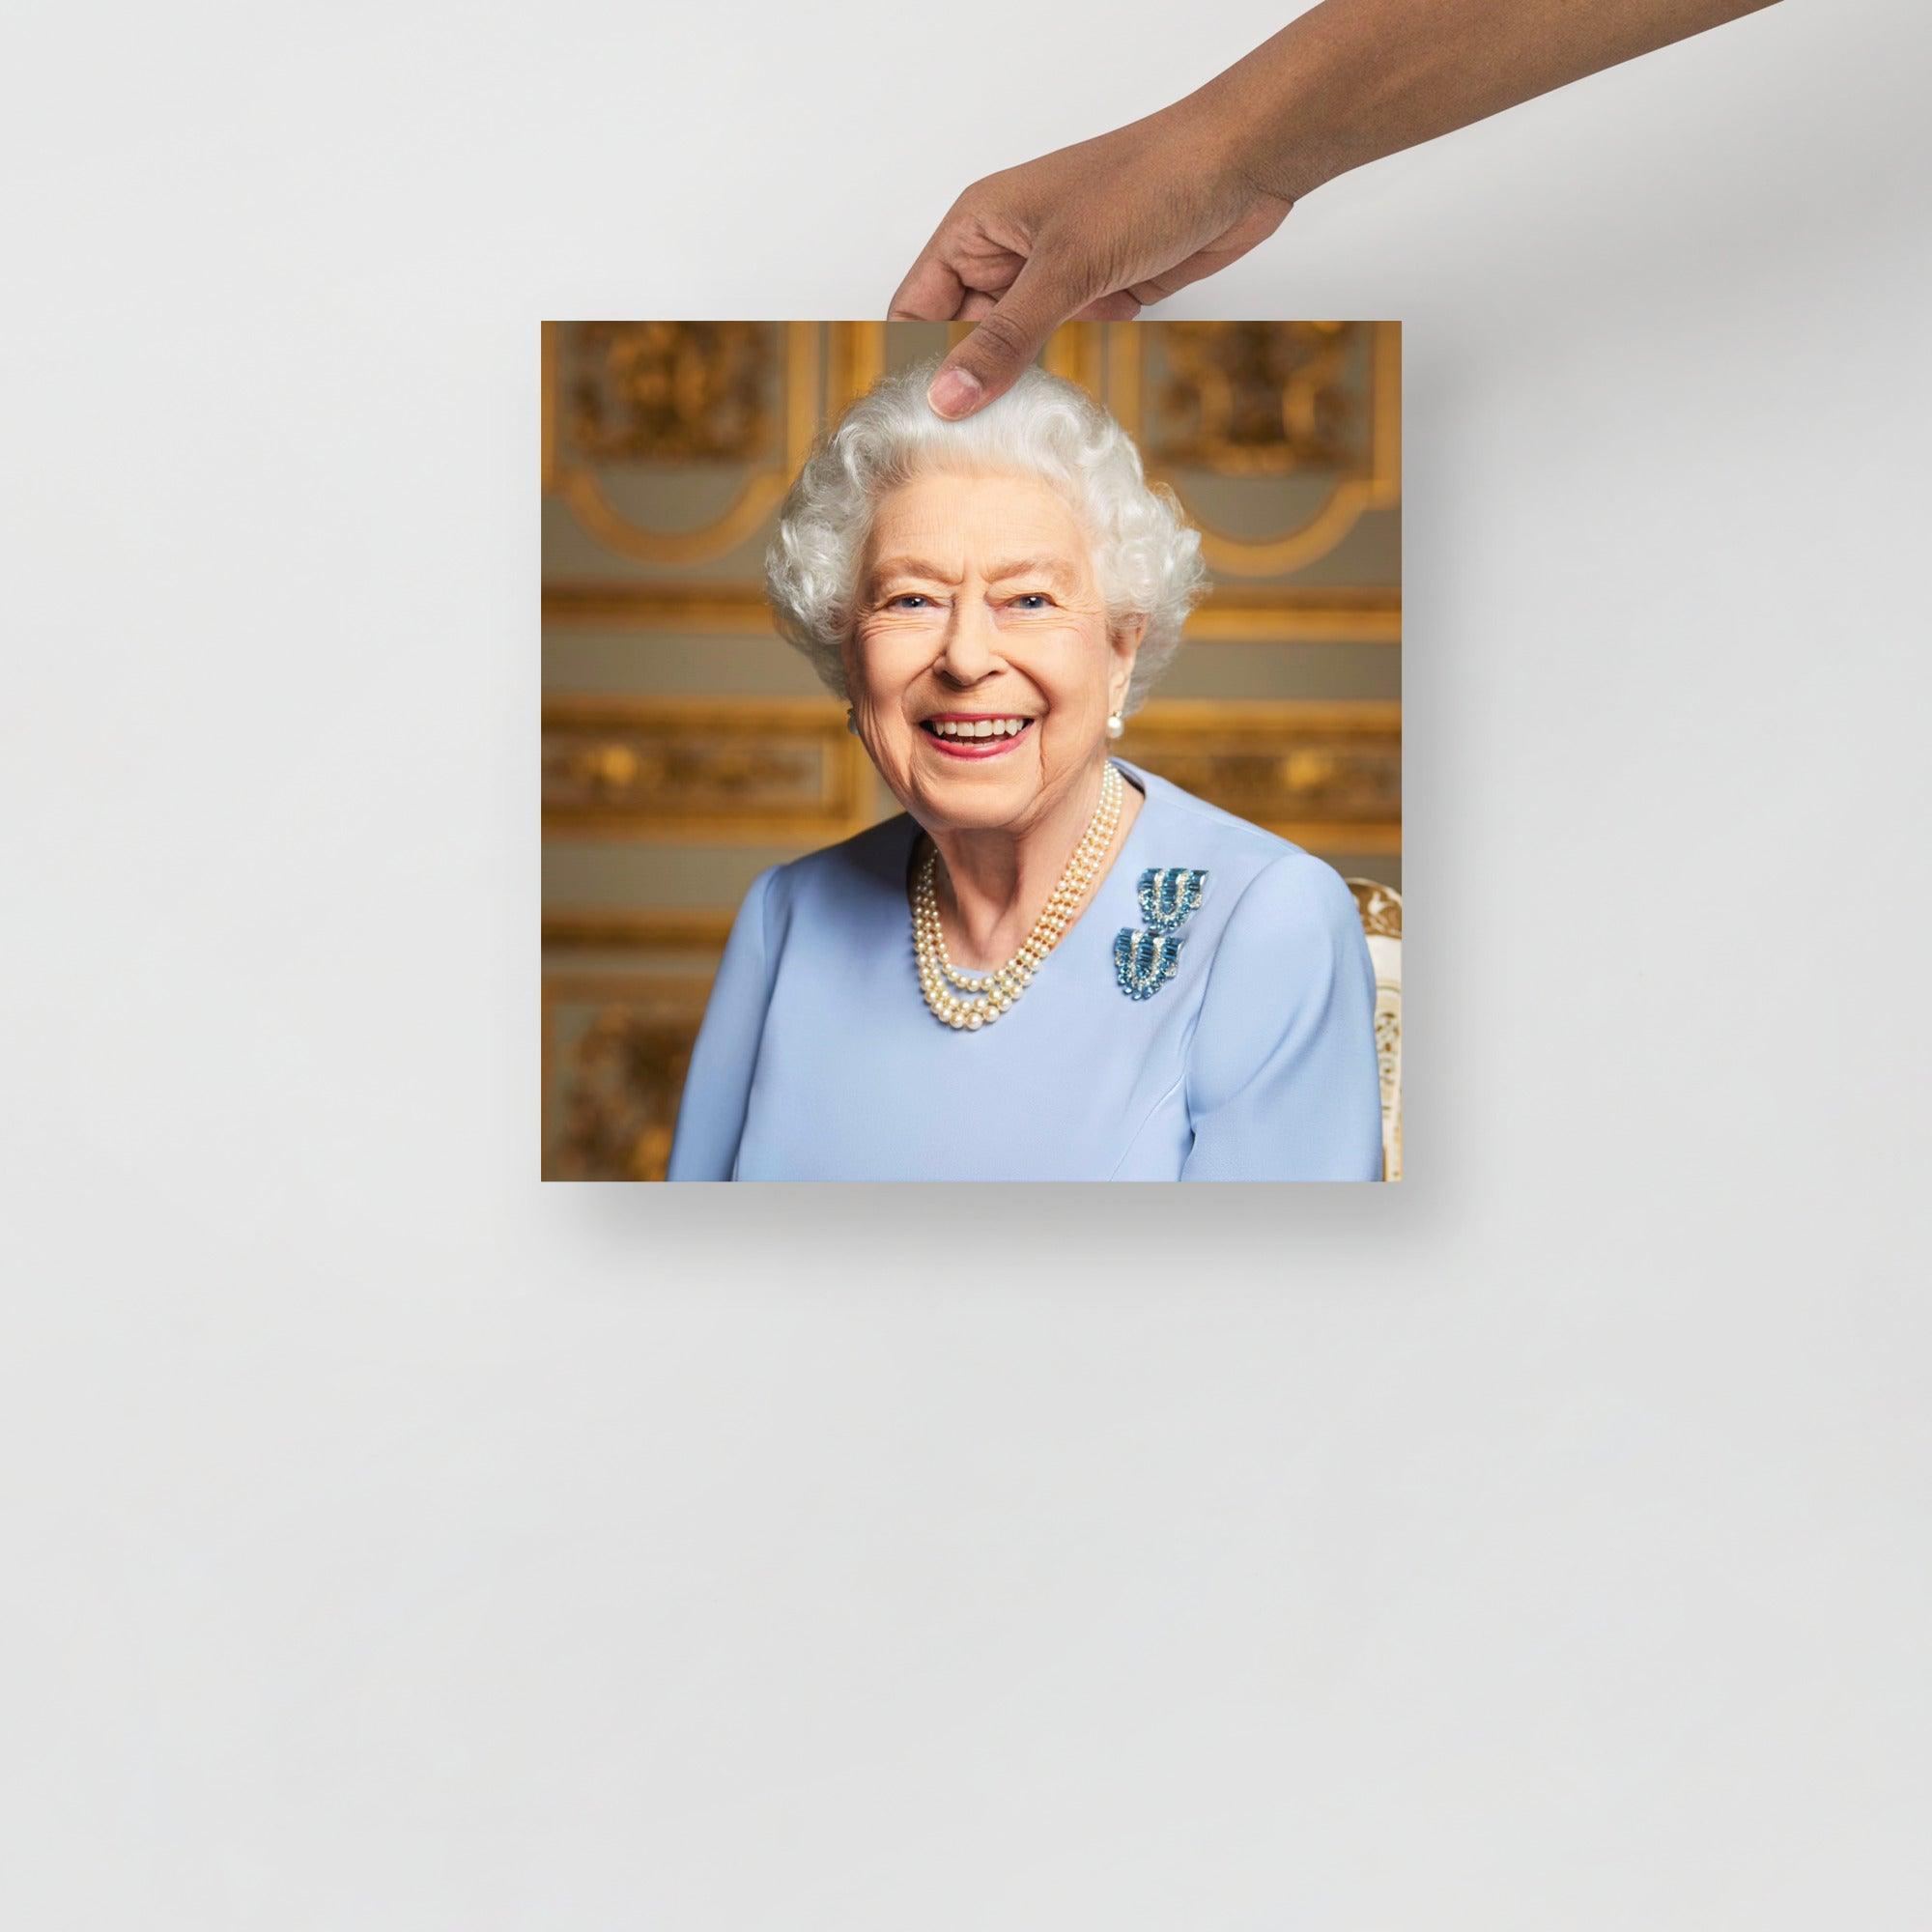 A Platinum Jubilee of Elizabeth II Official Portrait (Posthumous Release) poster on a plain backdrop in size 12x12”.